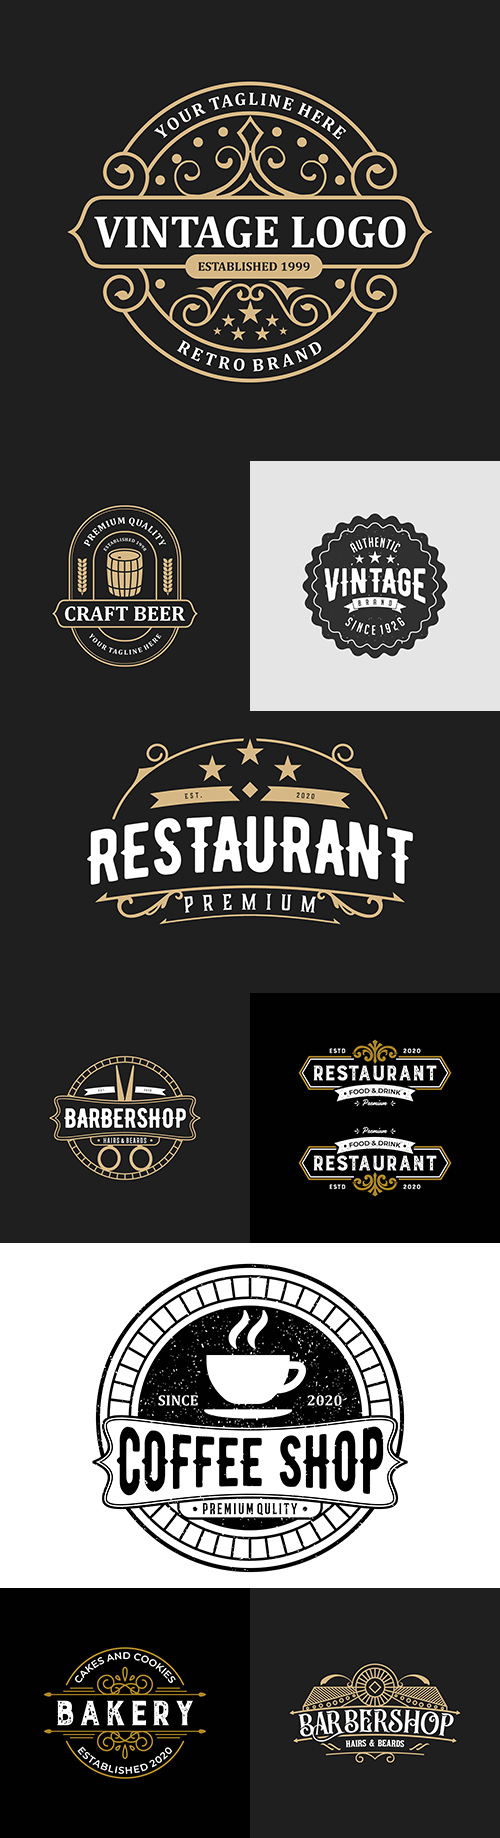 Vintage logo for restaurant and salon brand name design 
